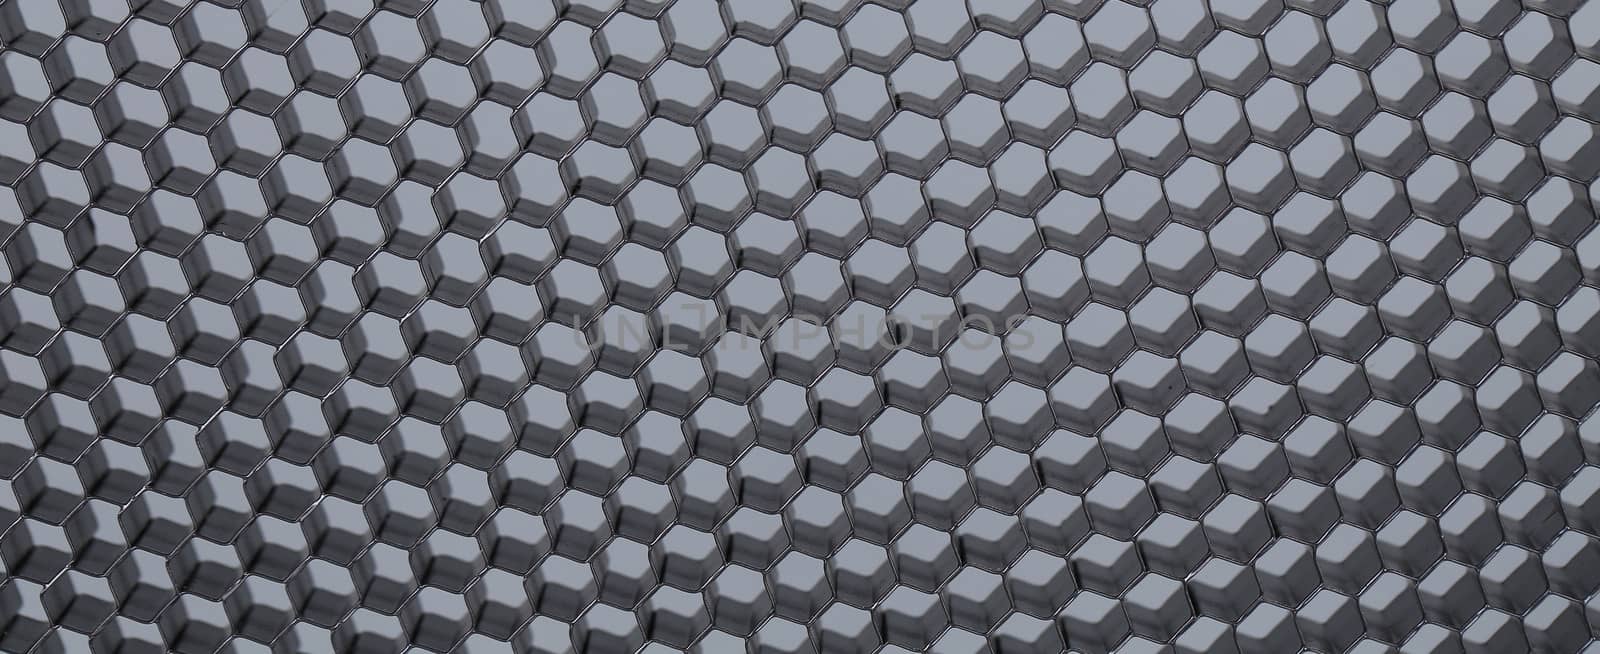 Close up of black net. Gray light. by indigolotos